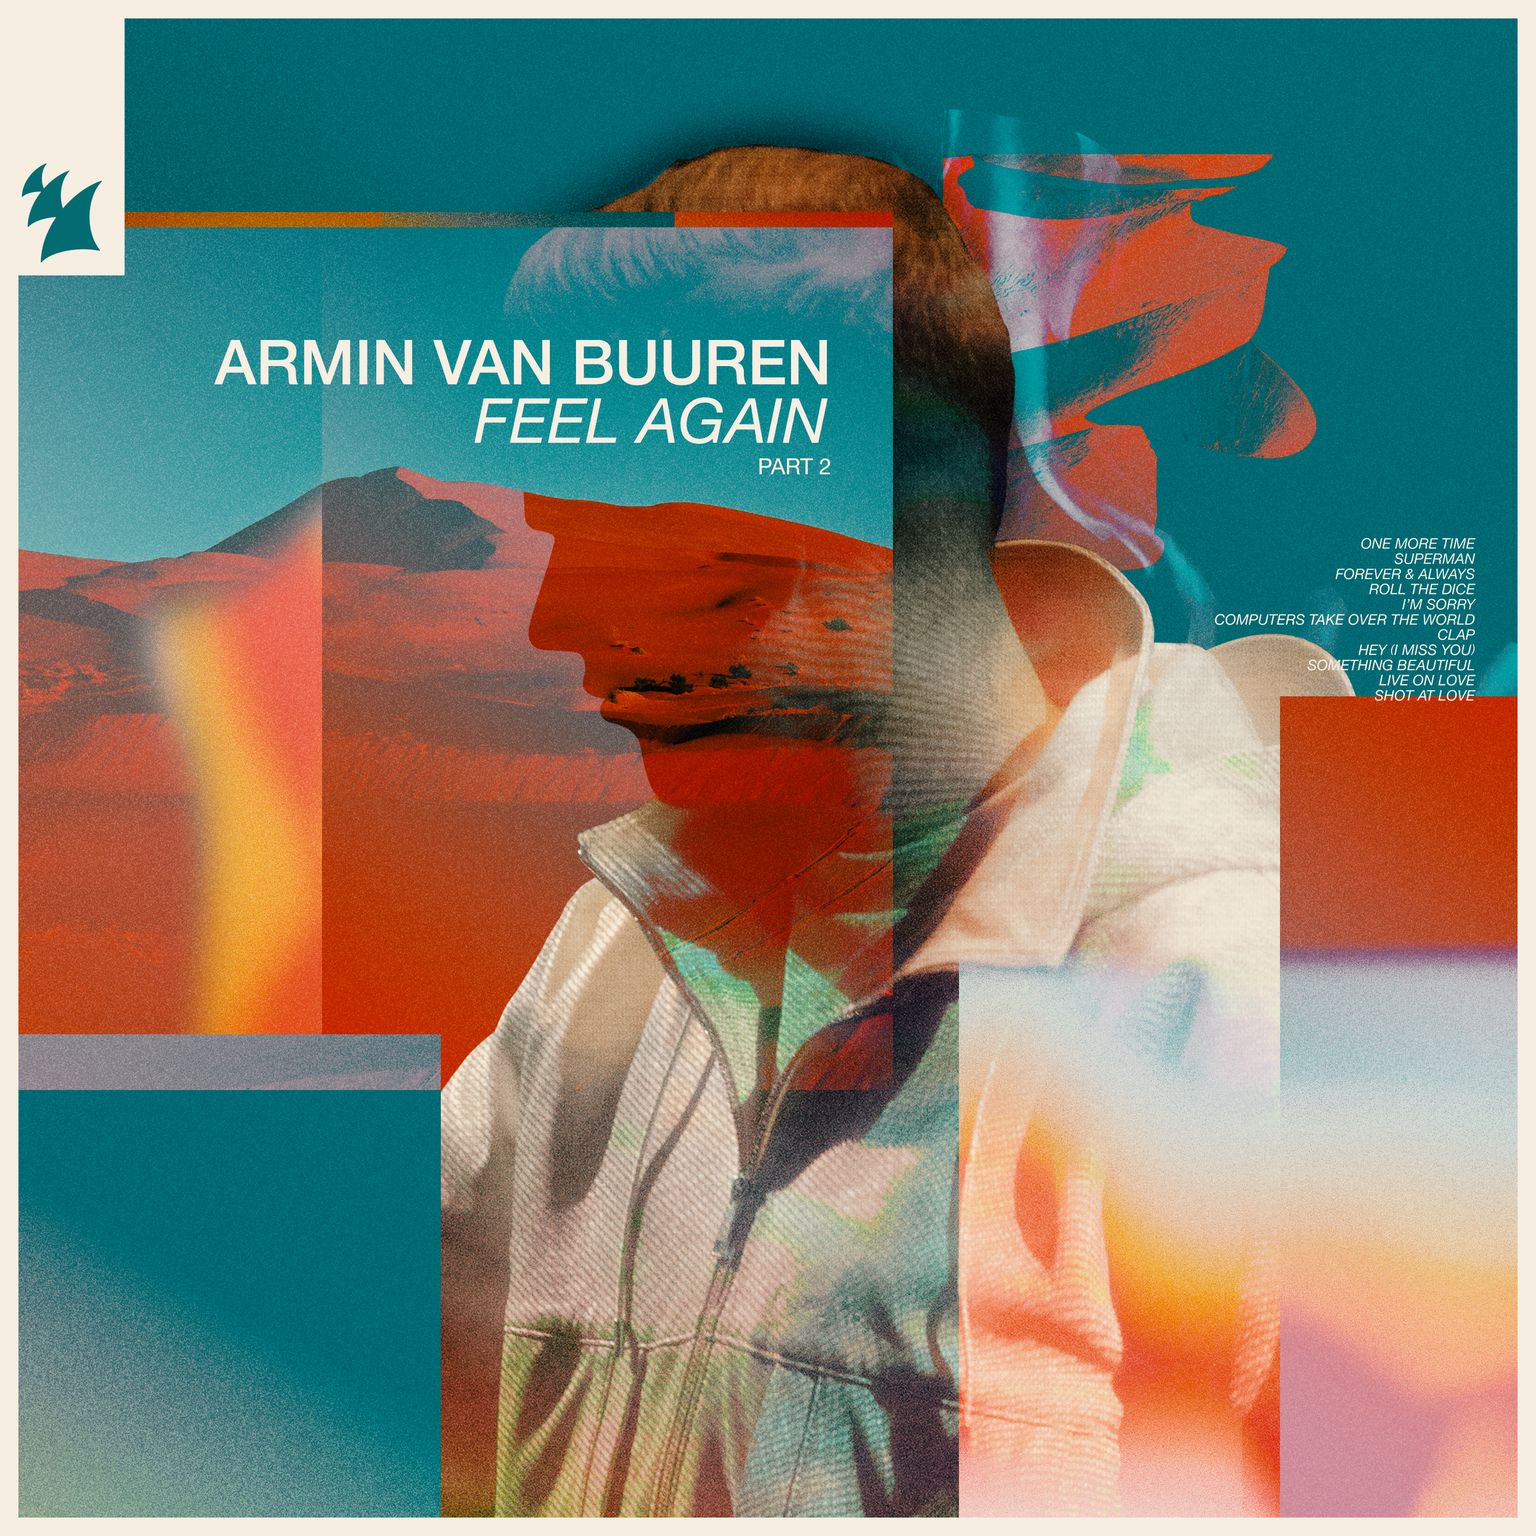 Armin van Buuren presents Feel Again part 2 on Armada Music